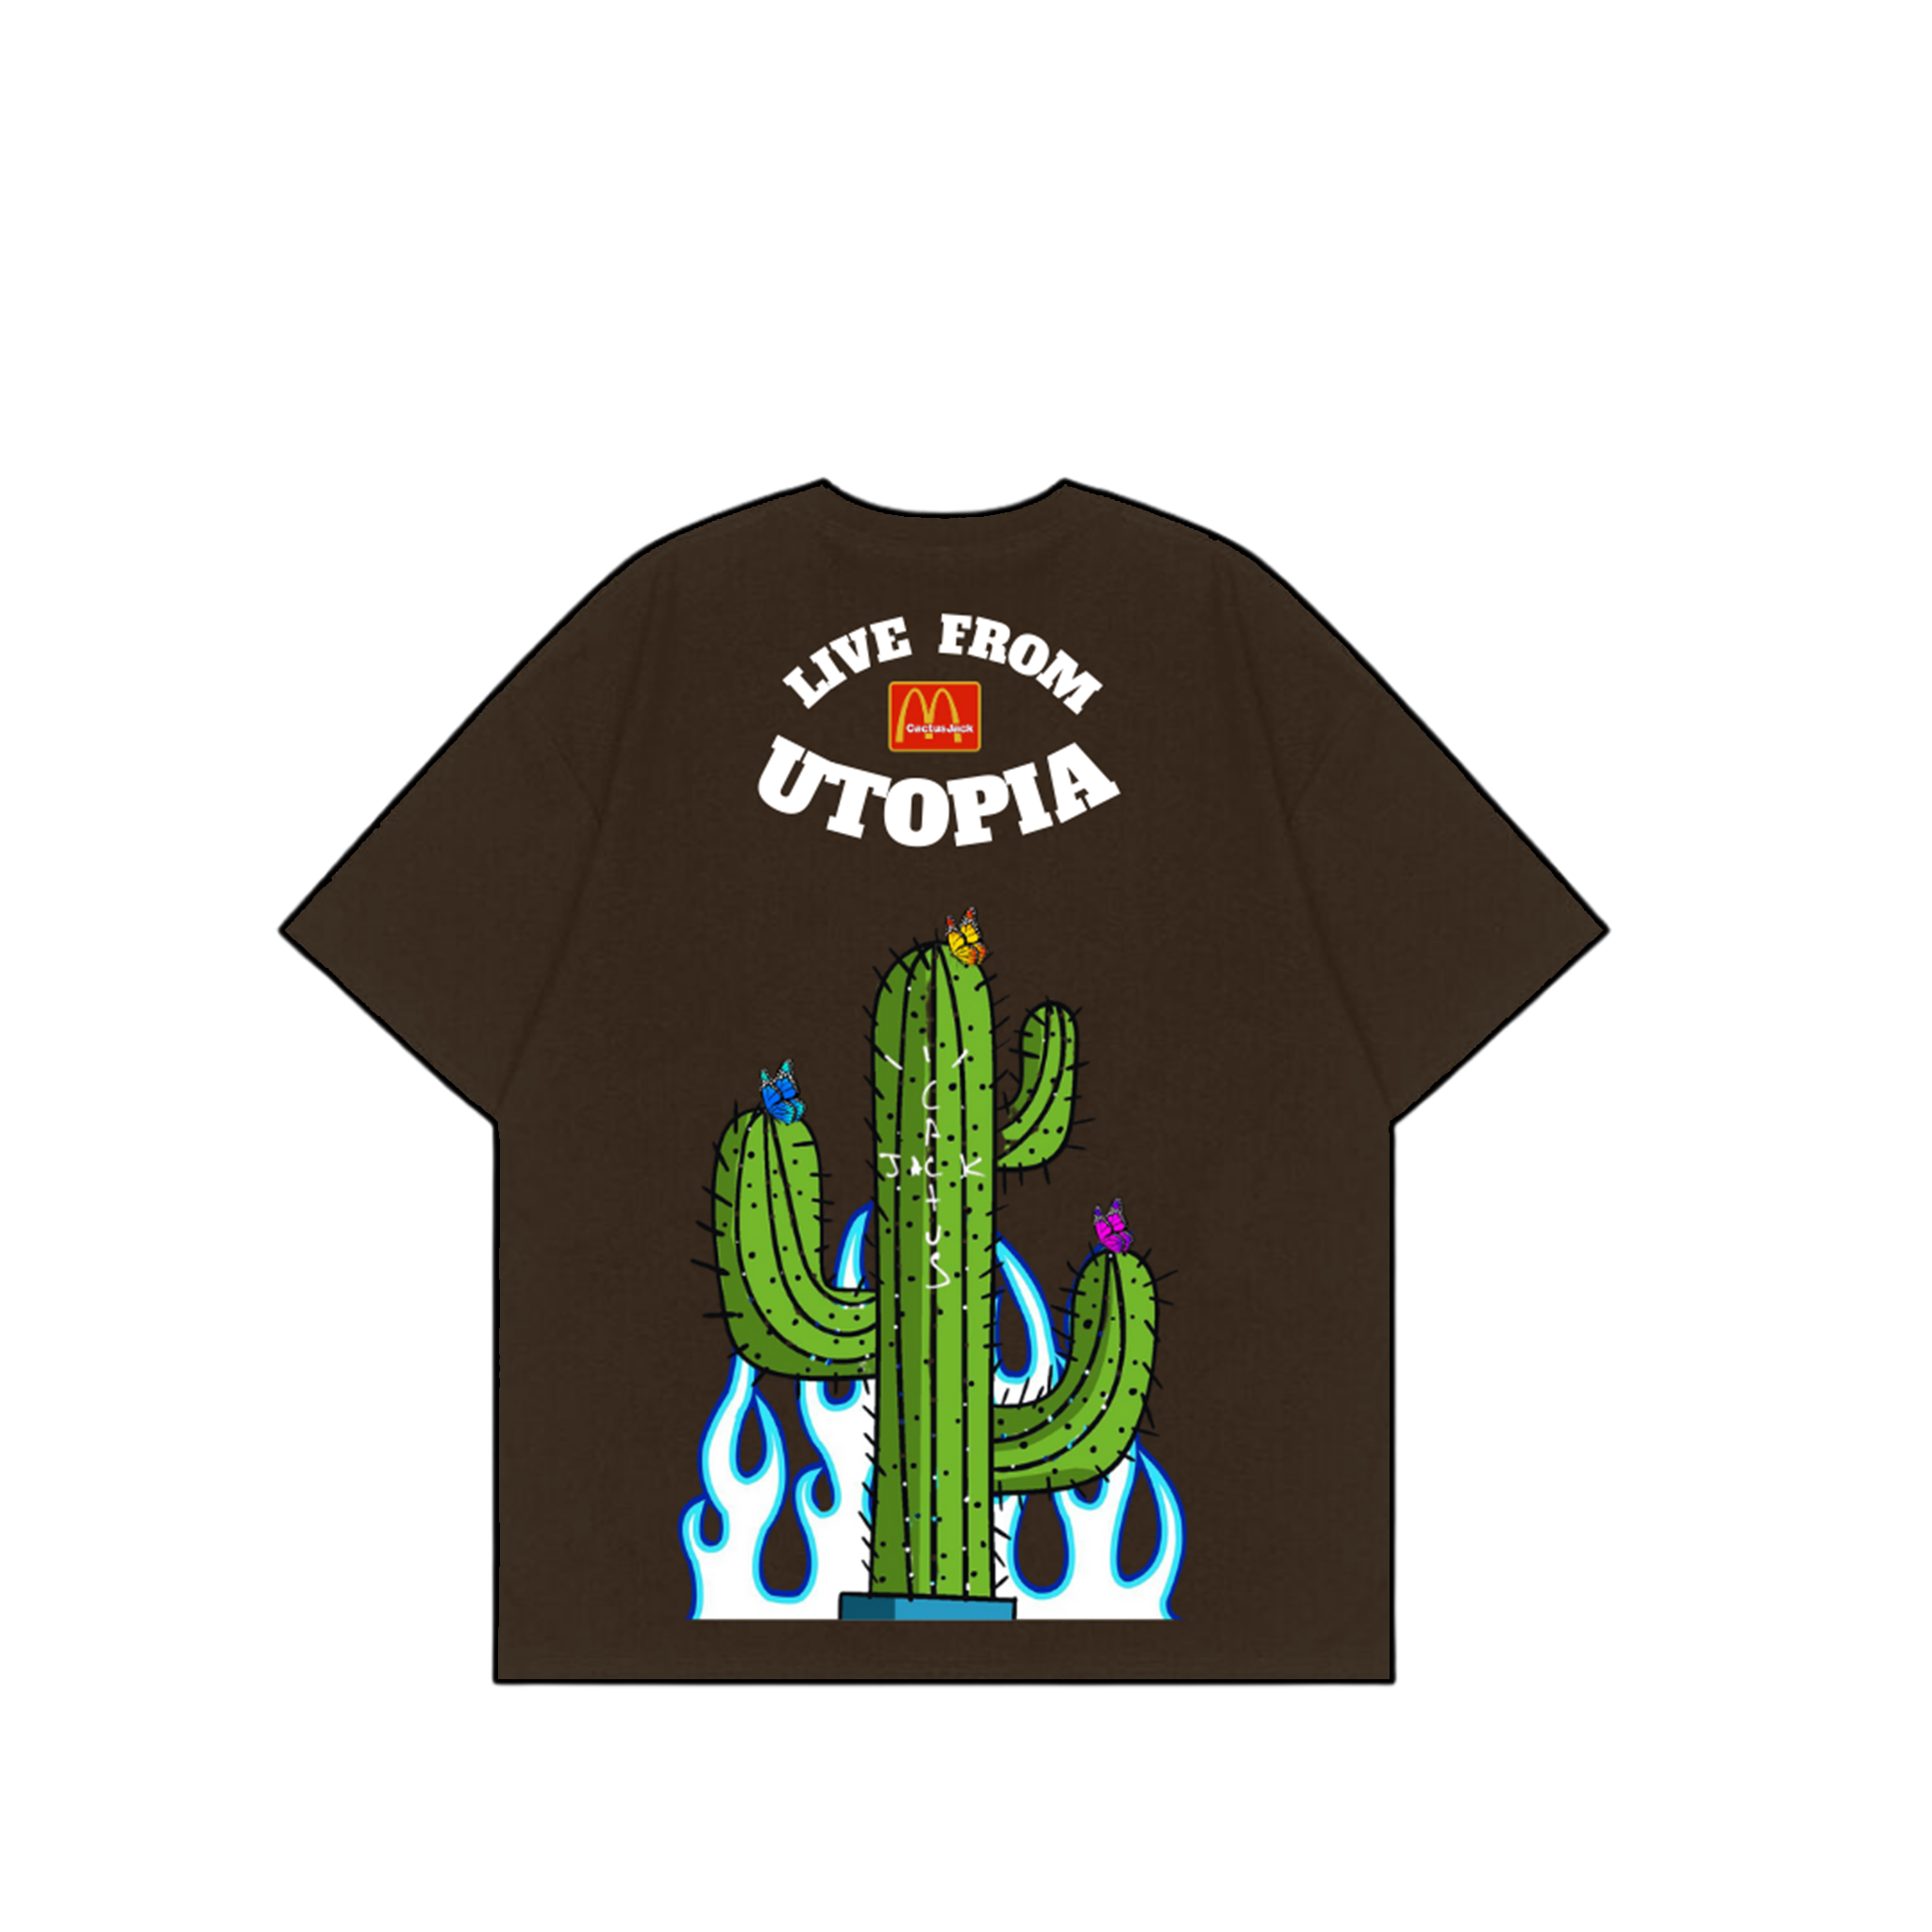 Travis Scott : Cactus Jack Utopia Oversize Unisex T-shirt